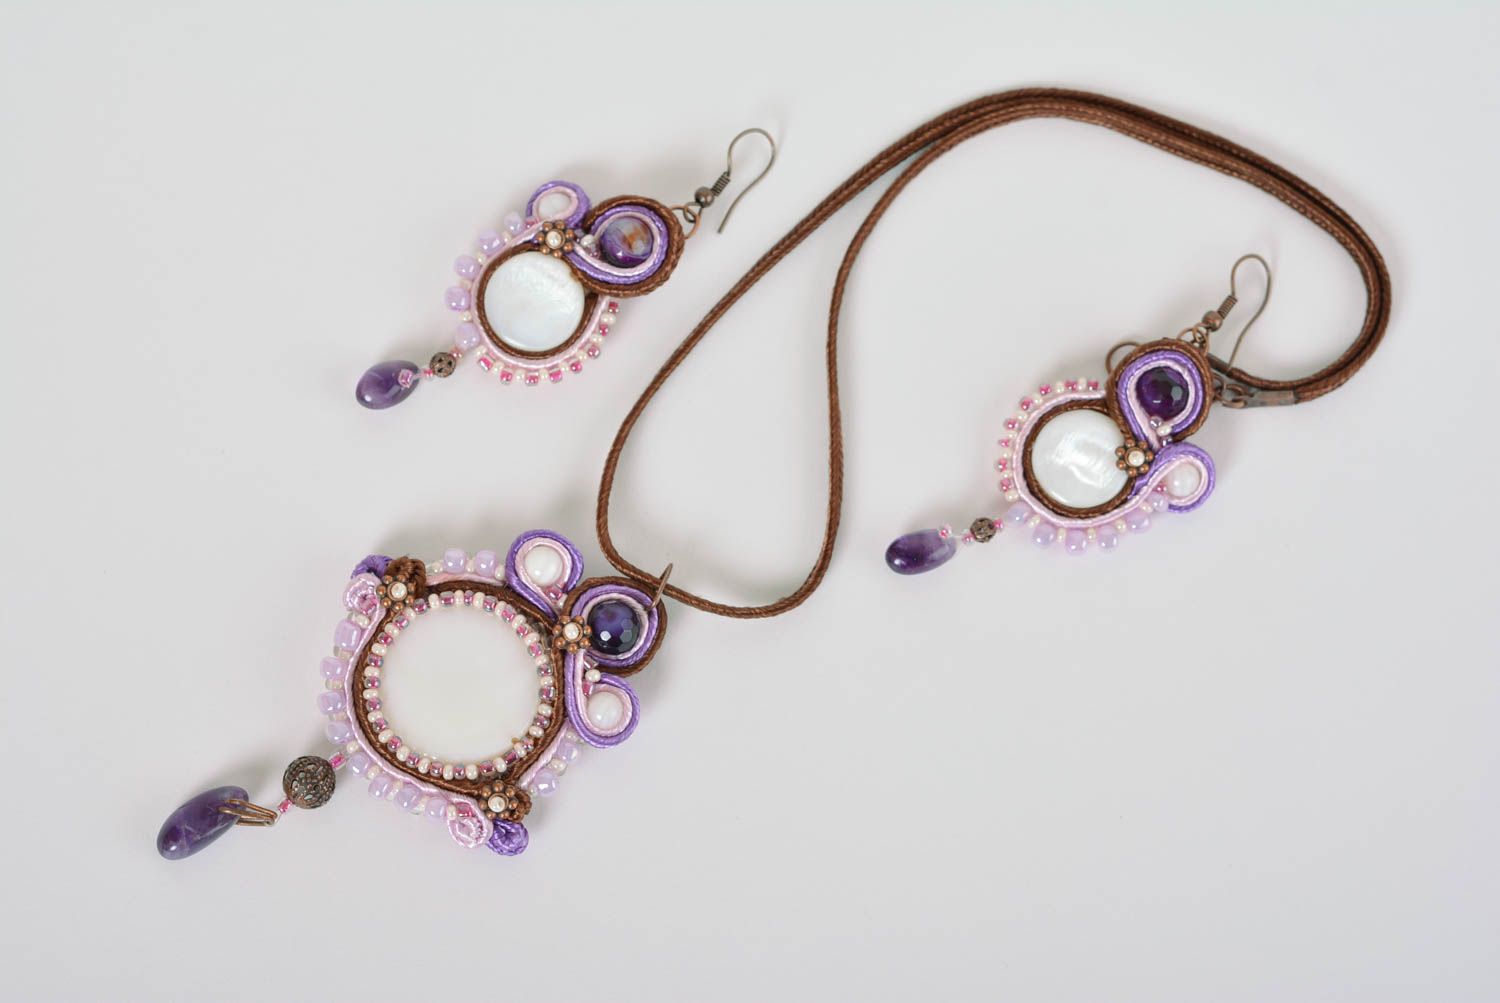 Handmade soutache jewelry soutache pendant and earrings stylish accessories photo 5